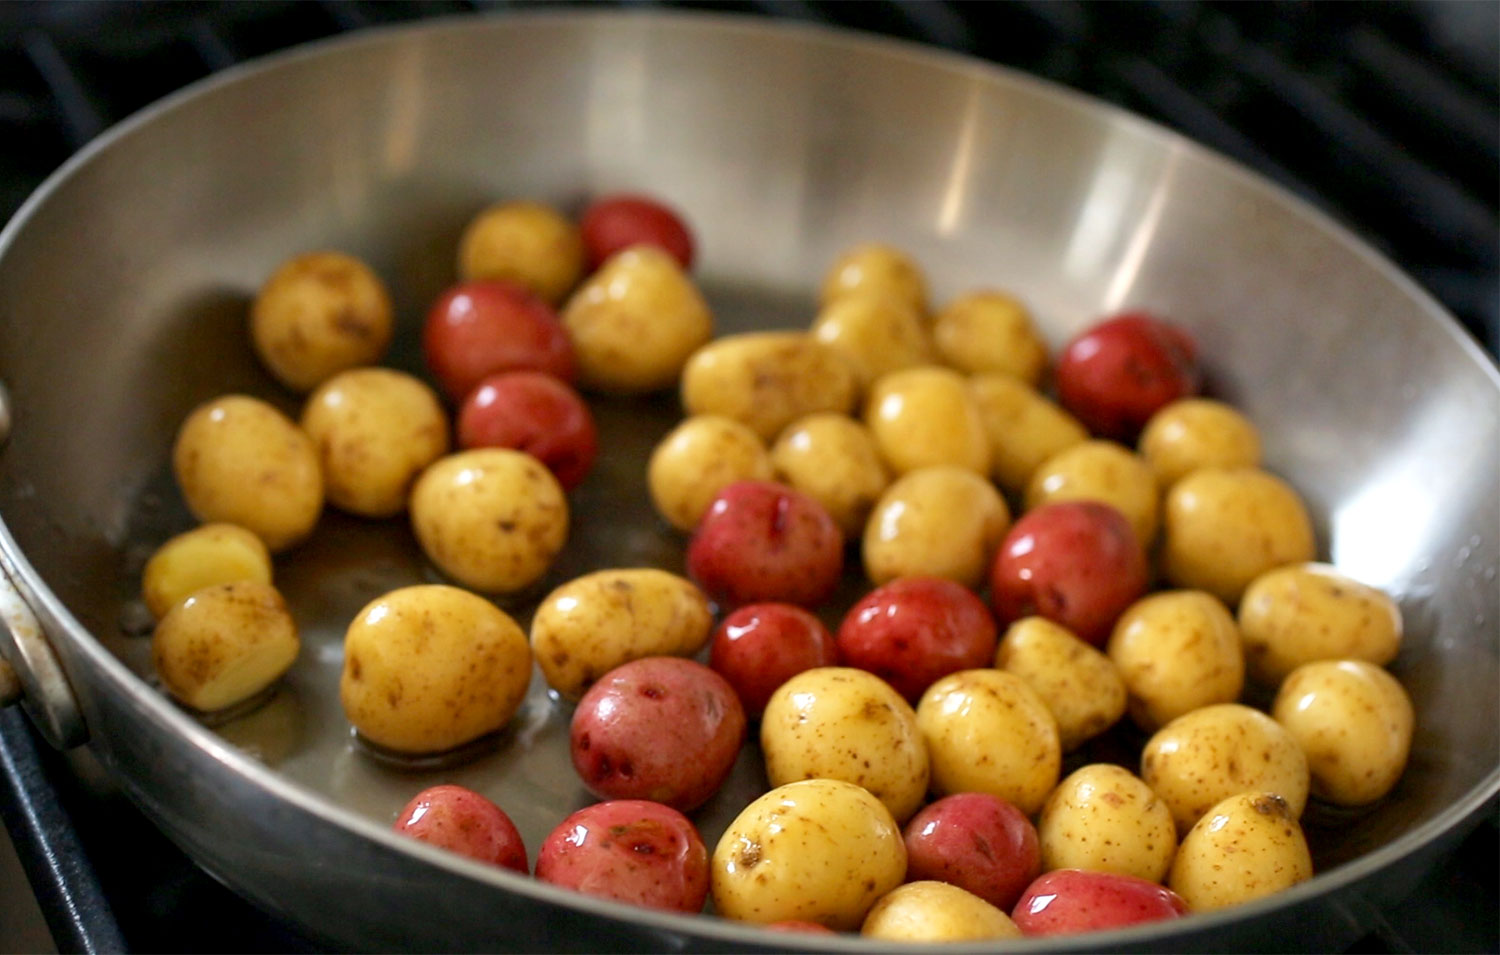 Can i steam potatoes for potato salad фото 42